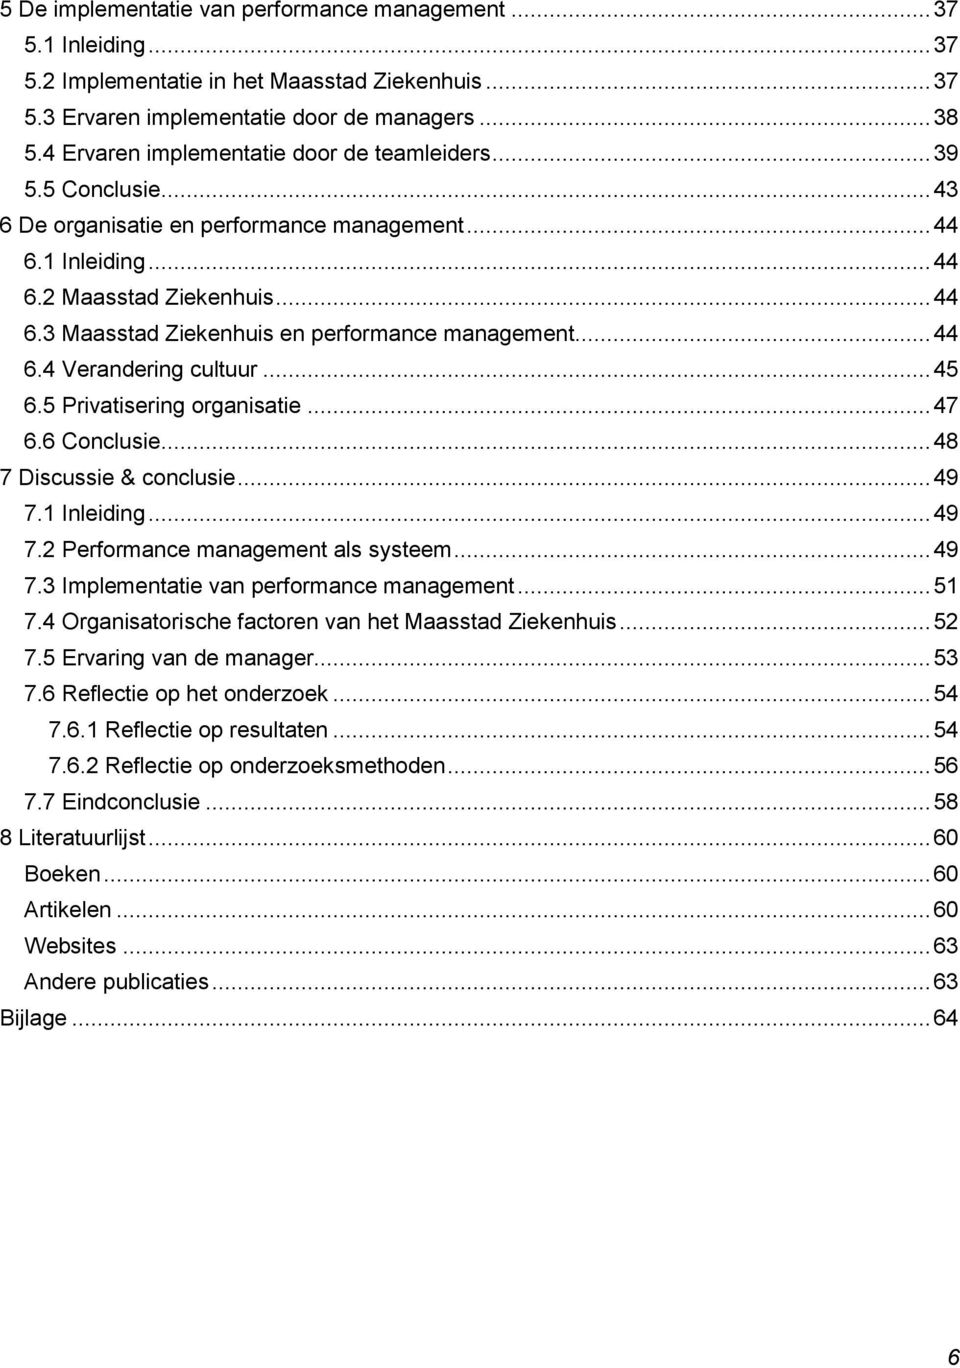 .. 44 6.4 Verandering cultuur... 45 6.5 Privatisering organisatie... 47 6.6 Conclusie... 48 7 Discussie & conclusie... 49 7.1 Inleiding... 49 7.2 Performance management als systeem... 49 7.3 Implementatie van performance management.